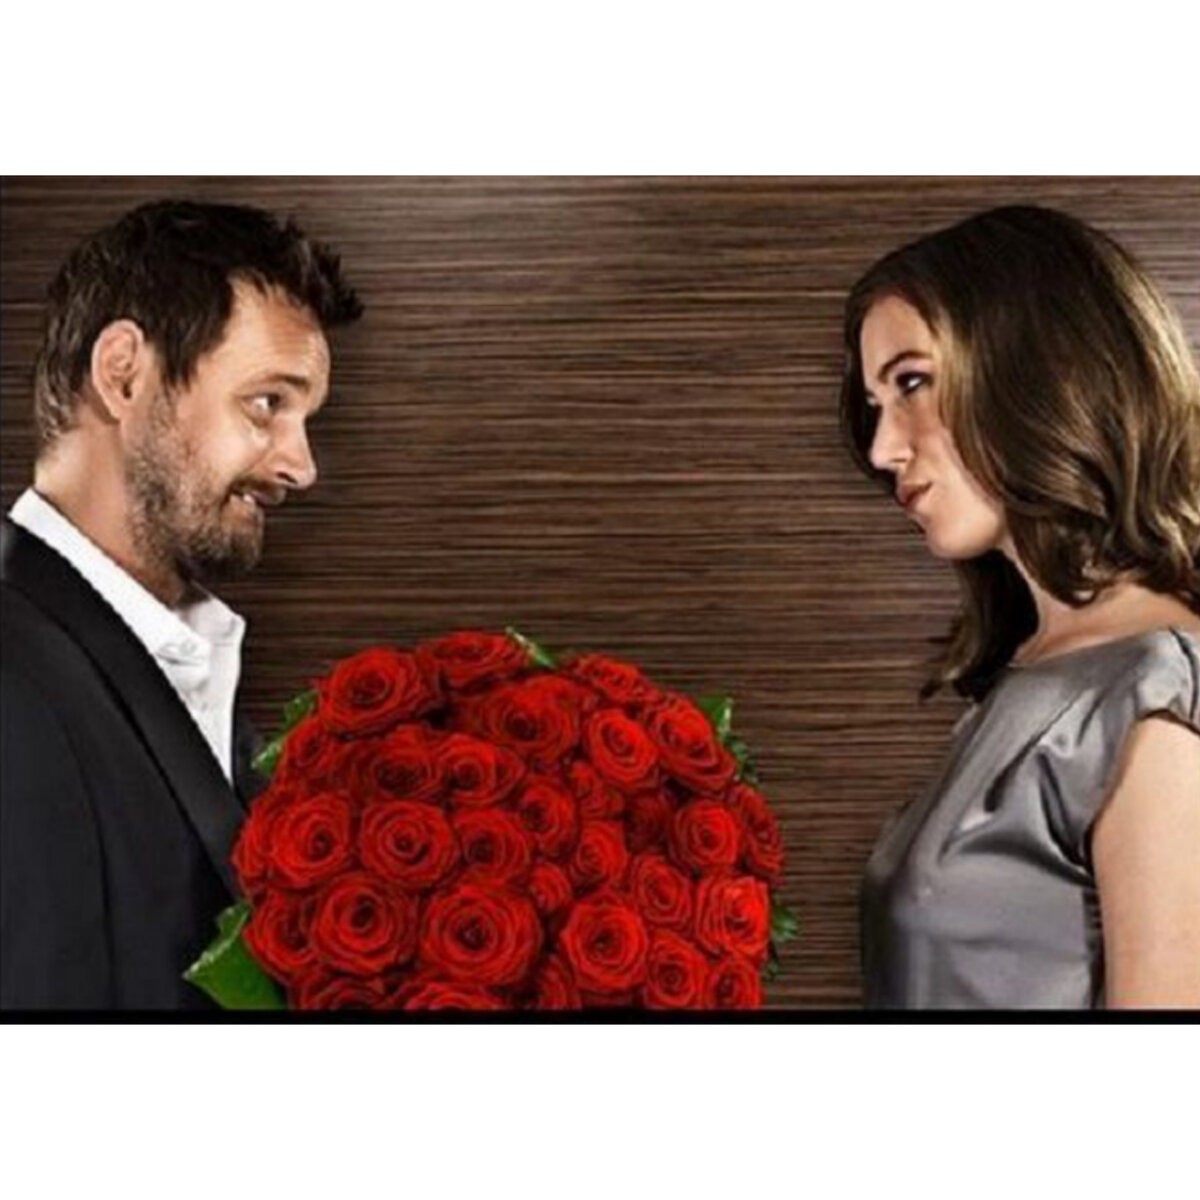 Red wife. Мужчина дарит цветы женщине. Цветы от мужчины. Мужчина с цветами. Цветы от мужчины женщине.